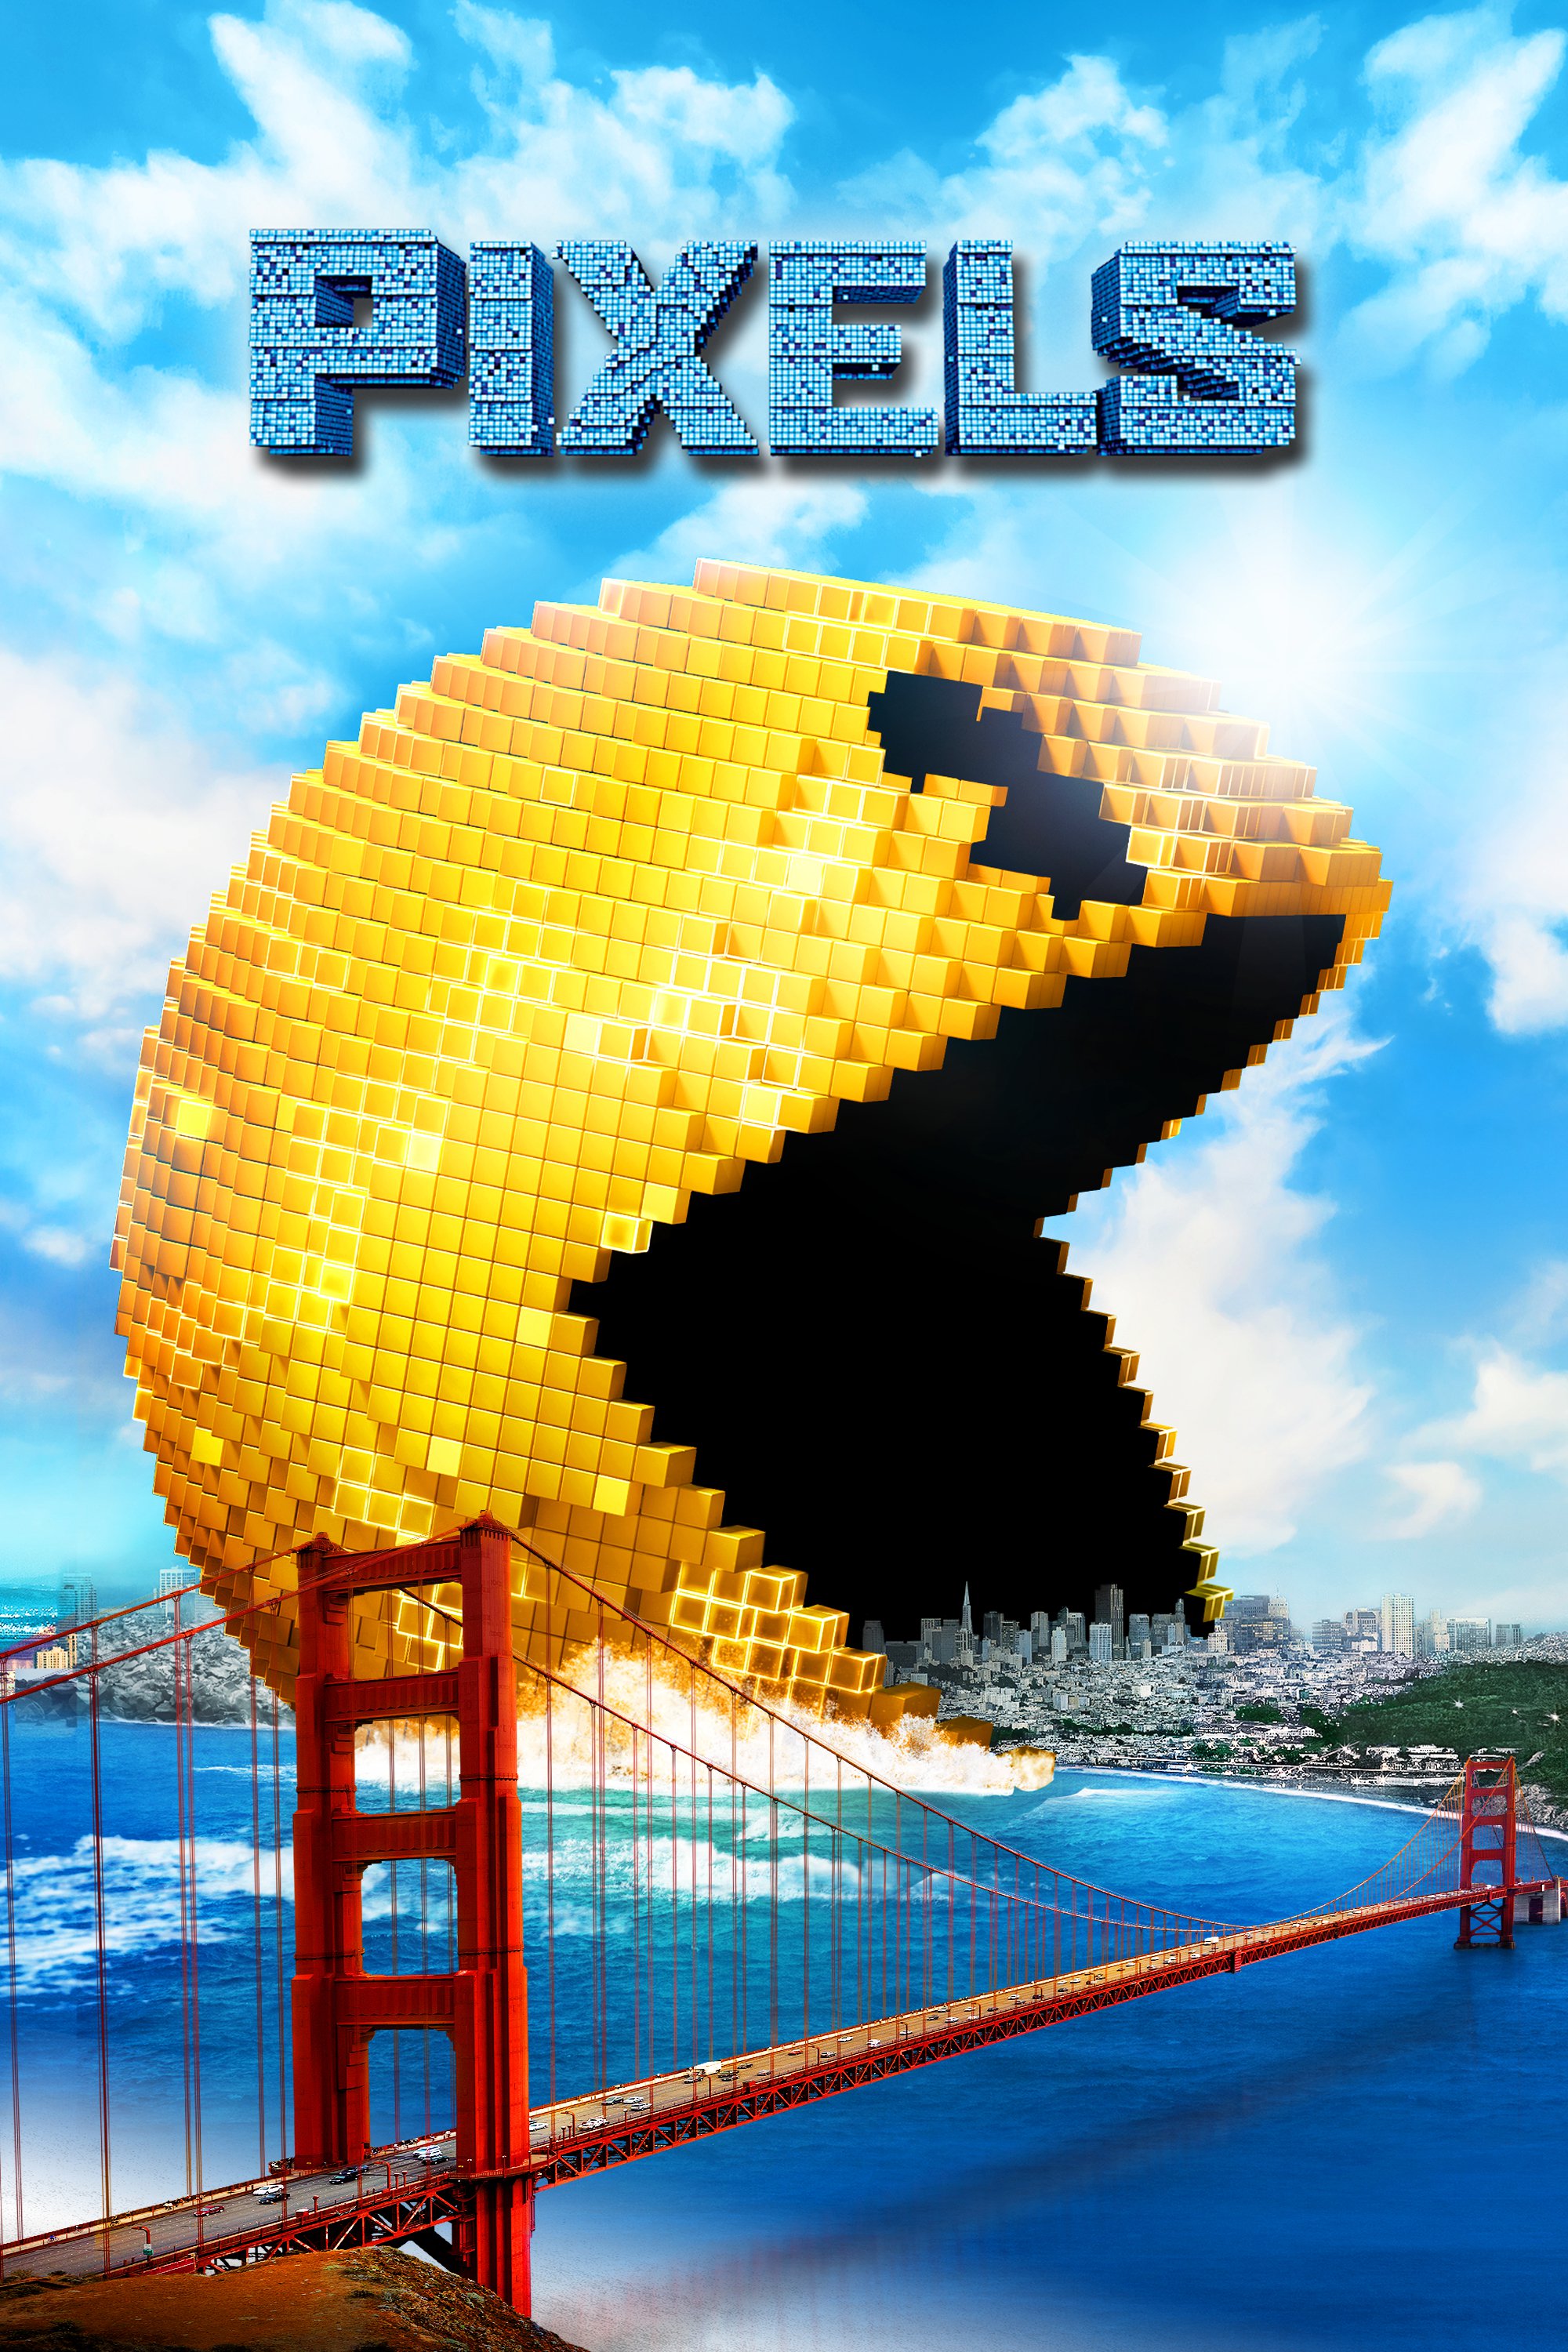 Pixels Movie